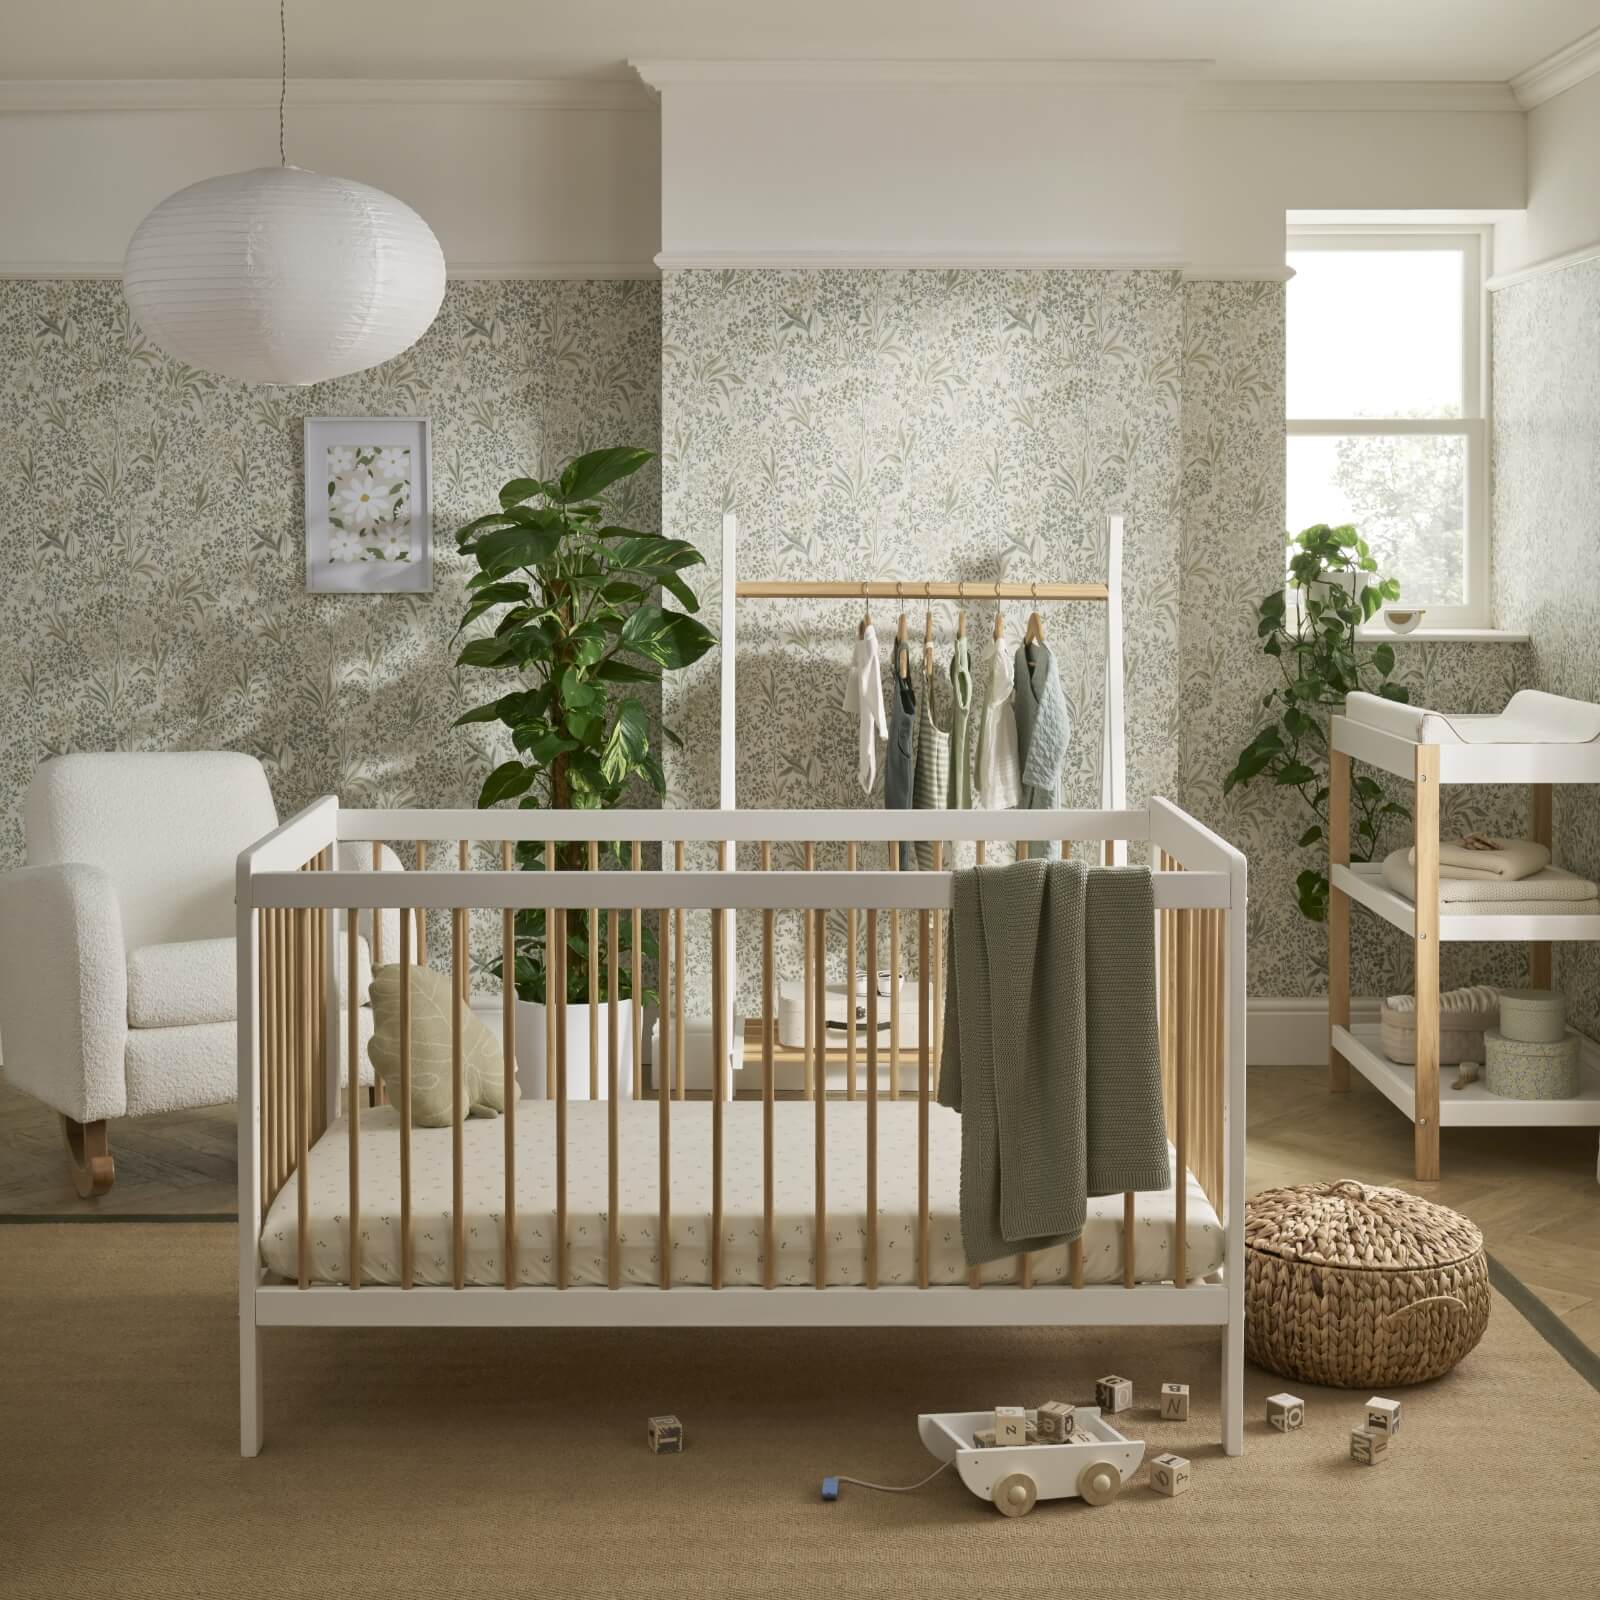 CuddleCo Nursery Room Sets CuddleCo Nola 3 Piece Room Set - White & Natural